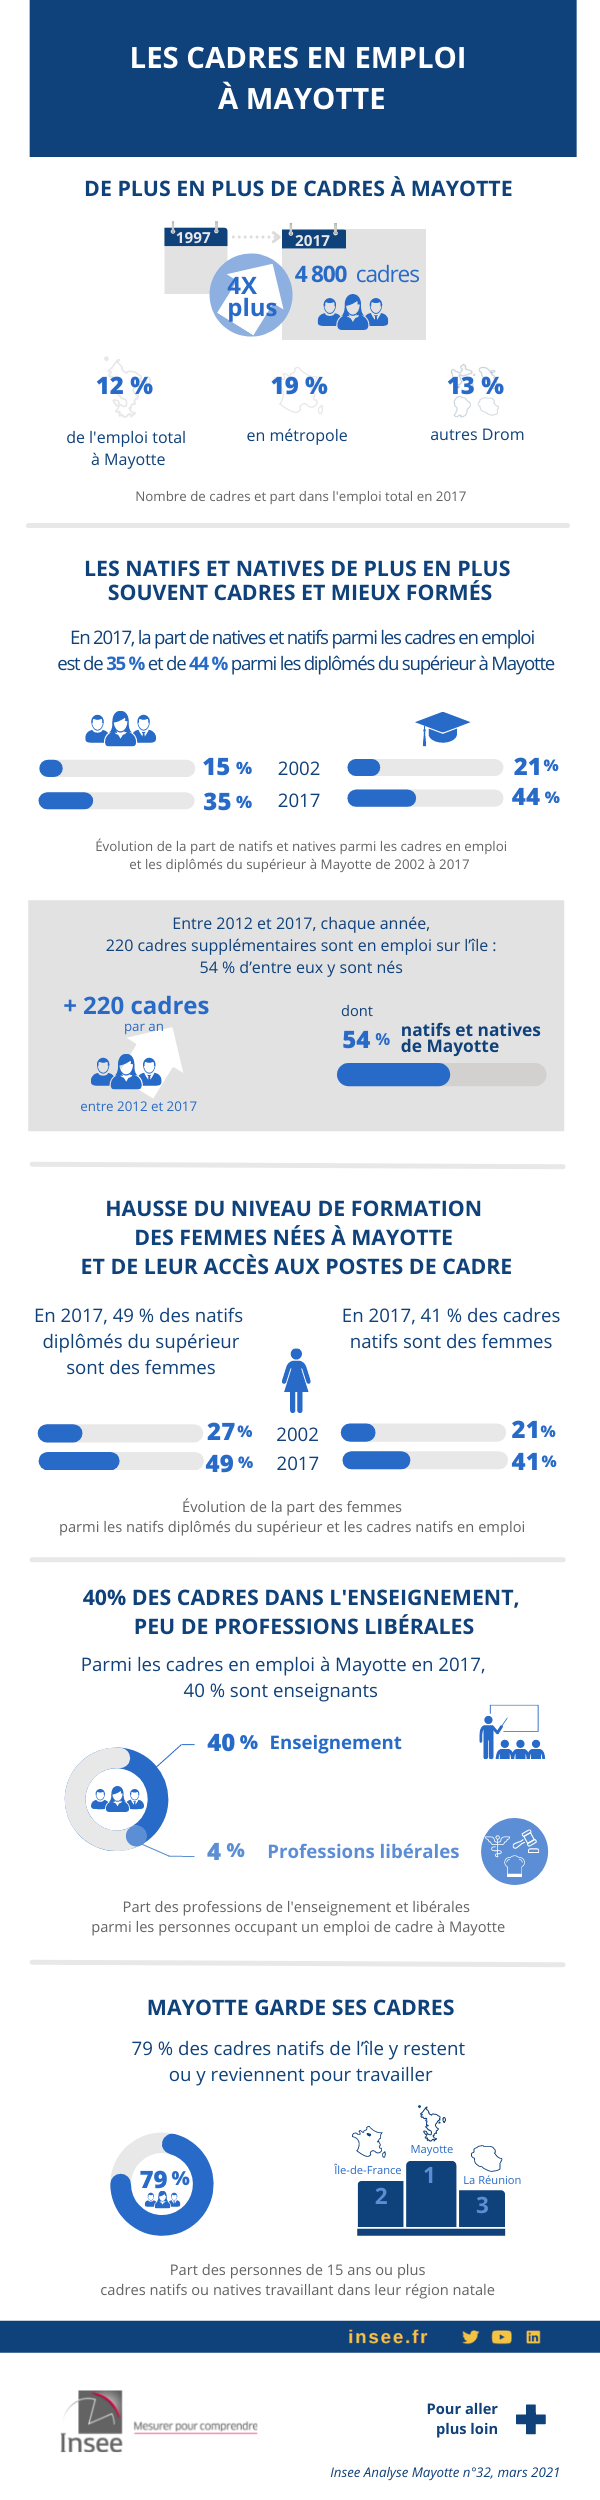 Les cadres en emploi à Mayotte